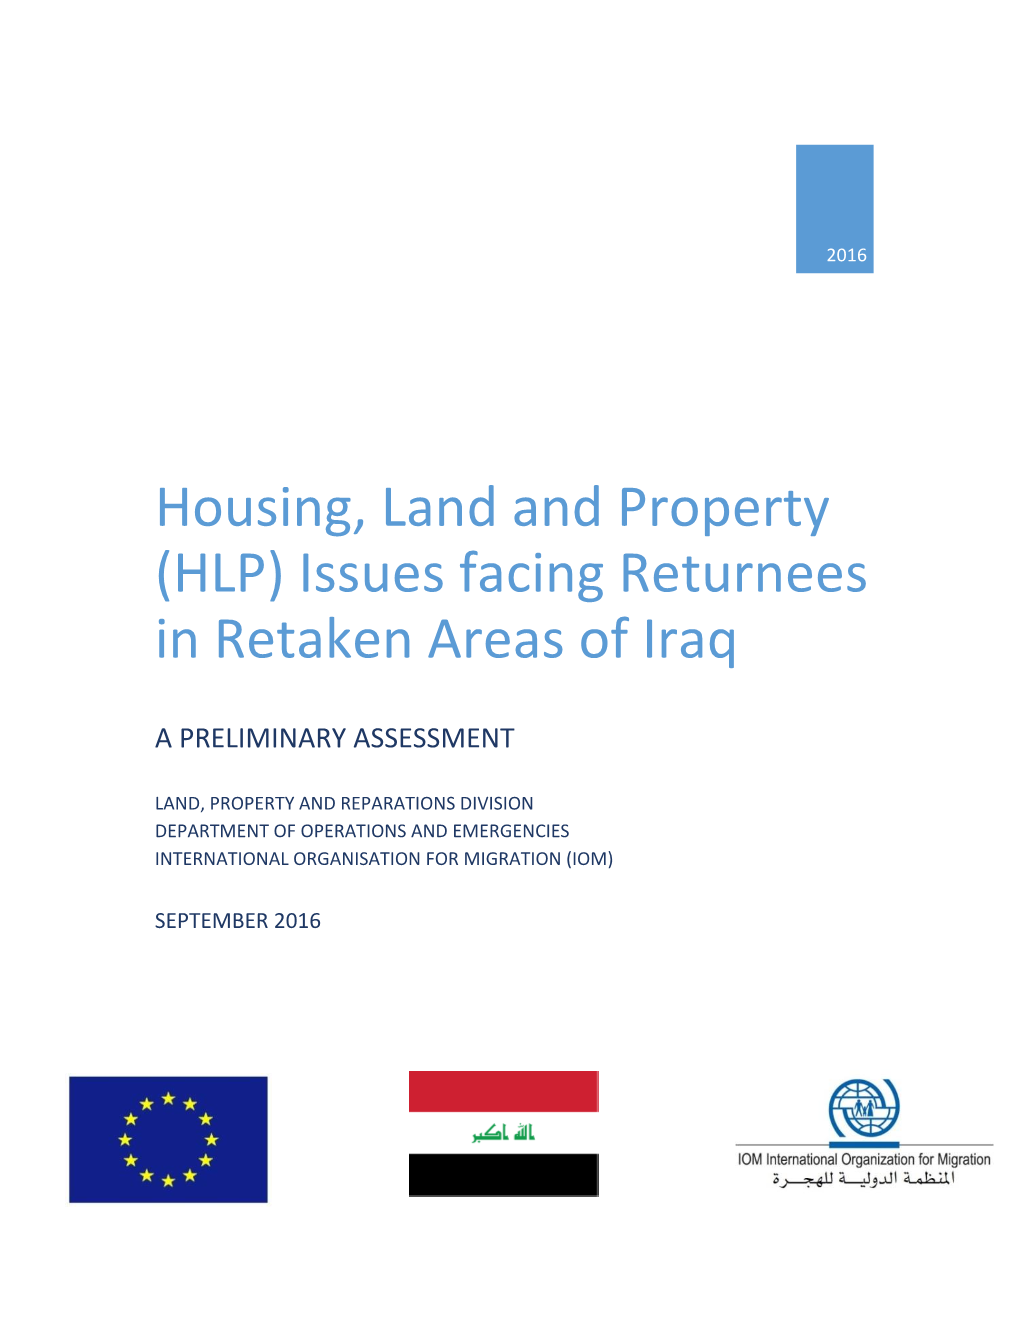 (HLP) Issues Facing Returnees in Retaken Areas of Iraq